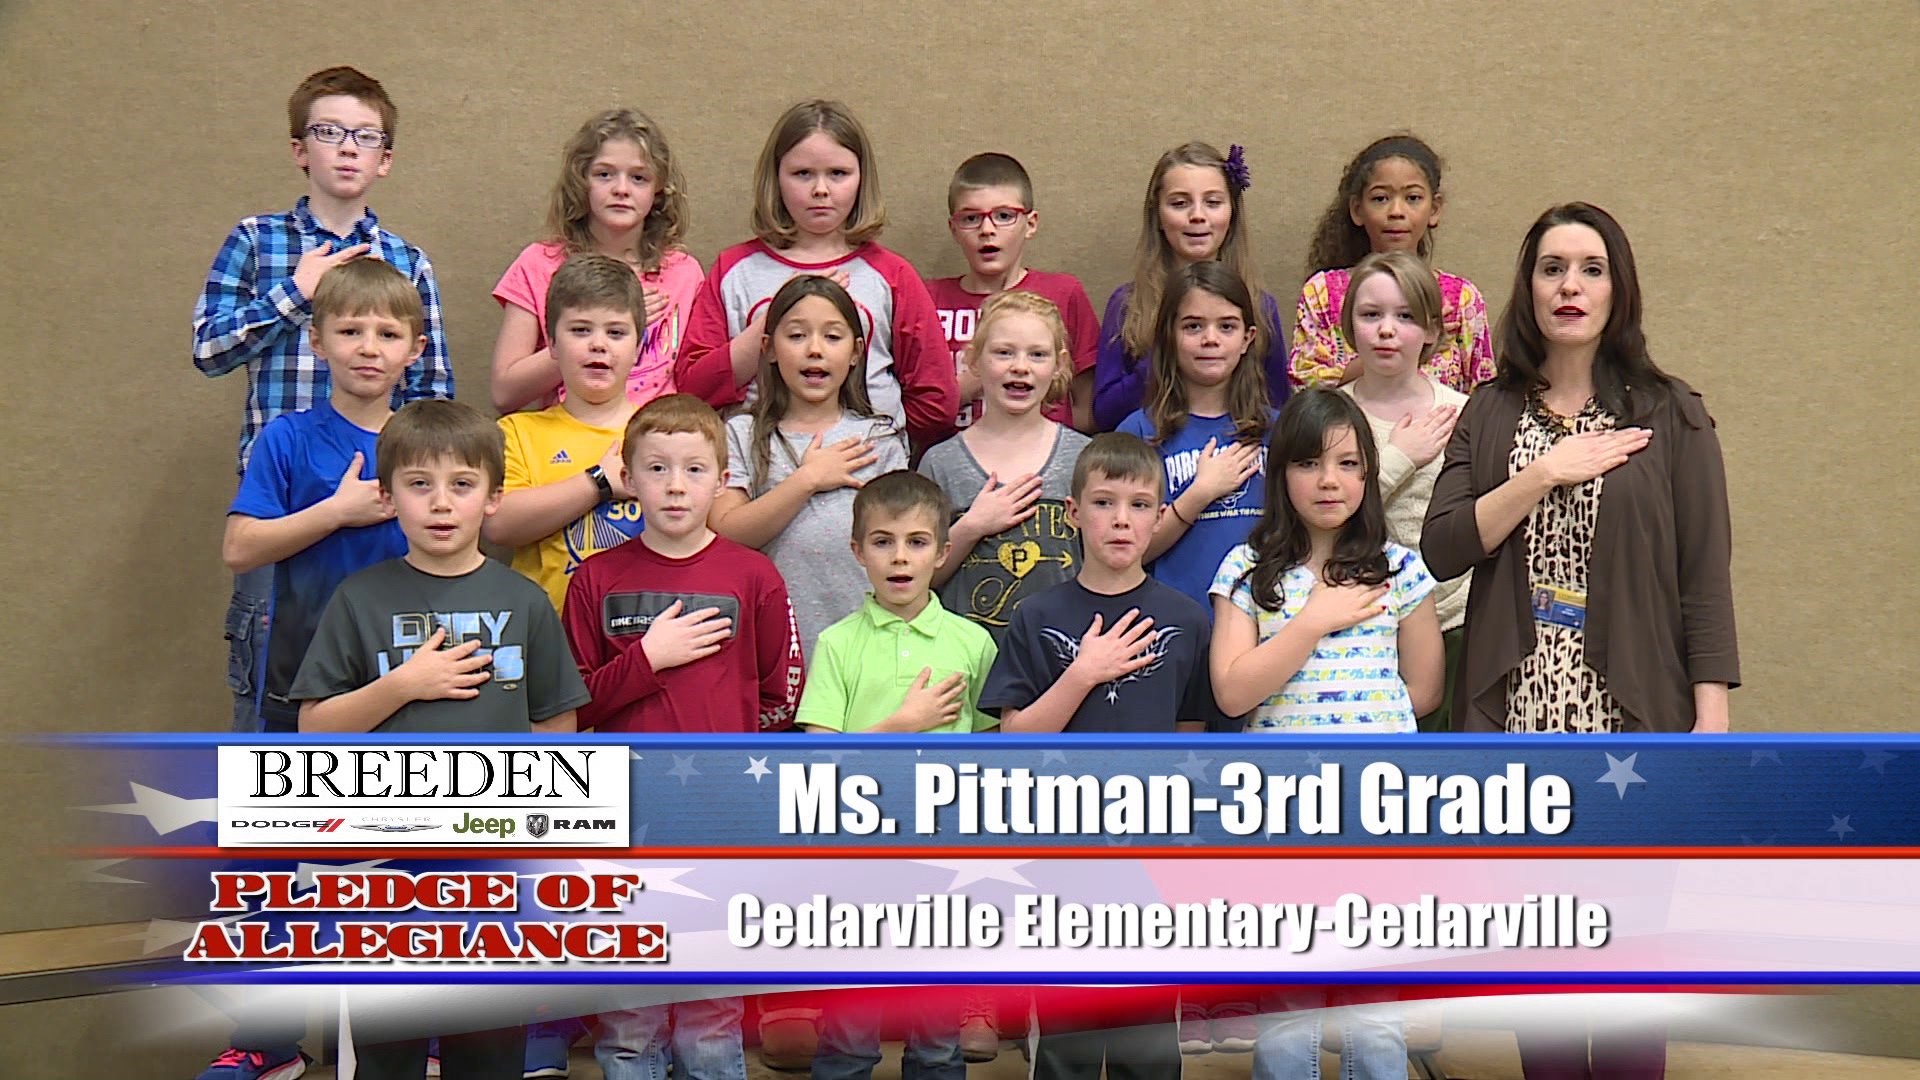 Cedarville Elementary, Cedarville - Ms. Pittman - 3rd Grade